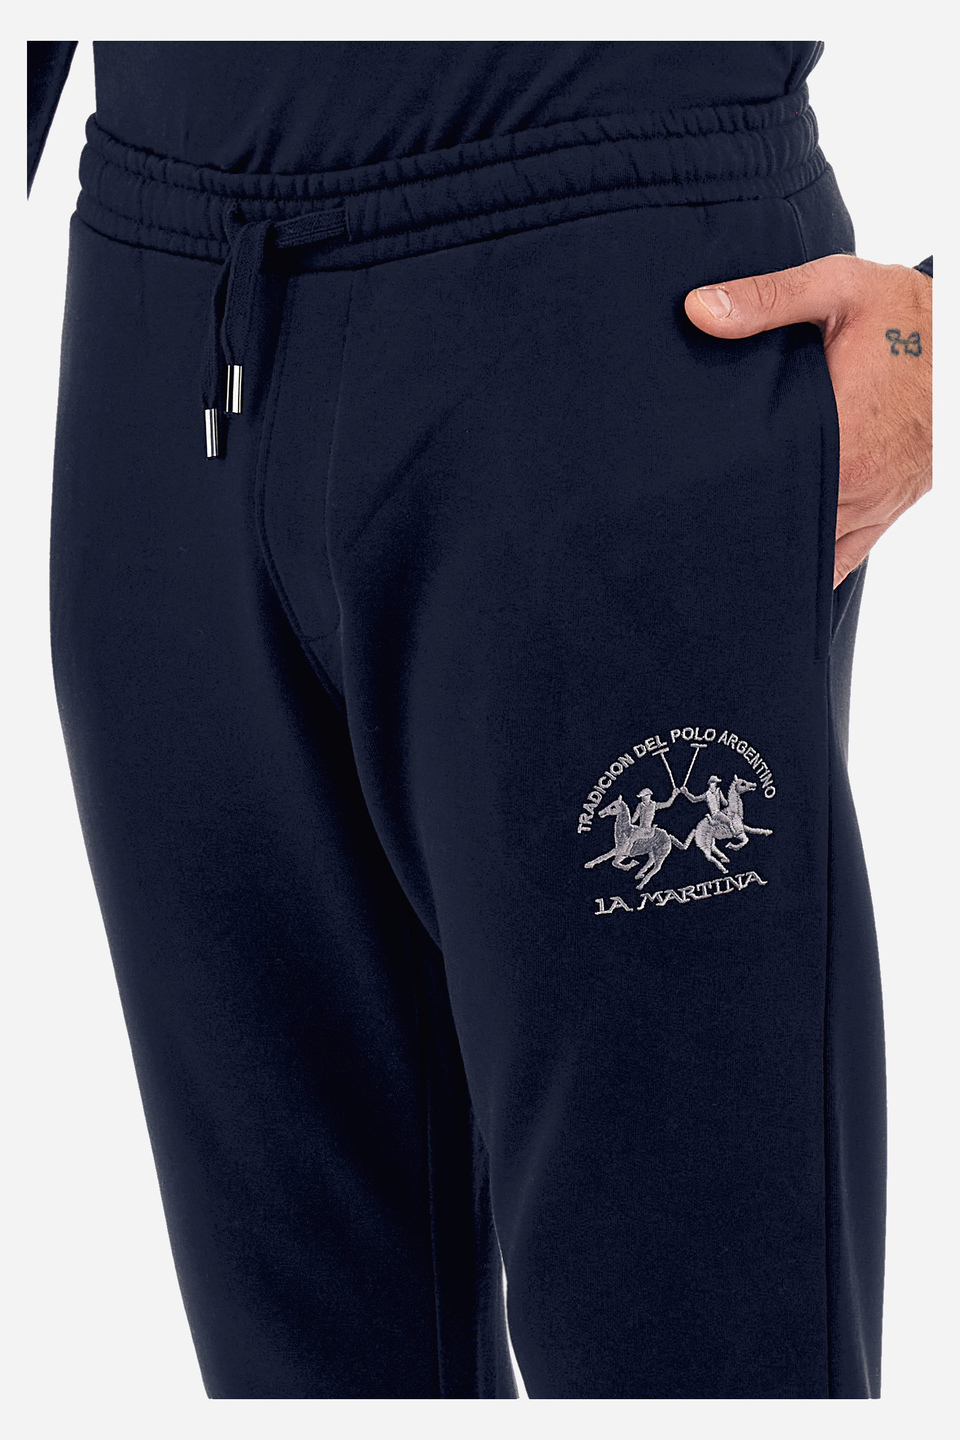 Pantaloni uomo jogging regular fit - Wallas | La Martina - Official Online Shop